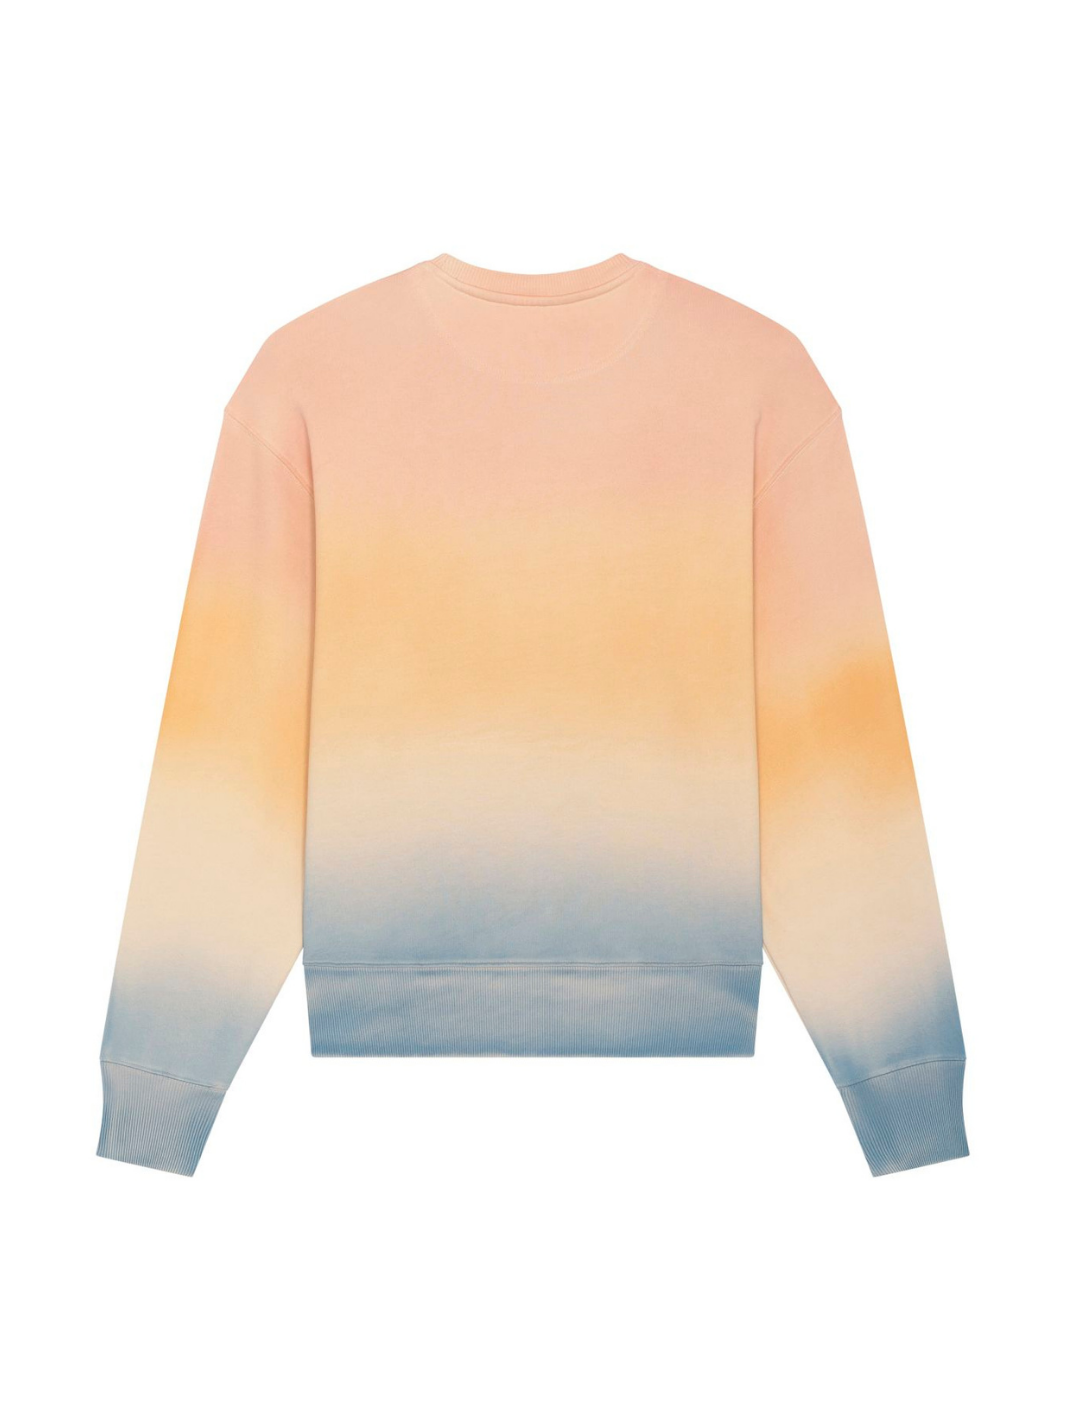 Sunset sweatshirt